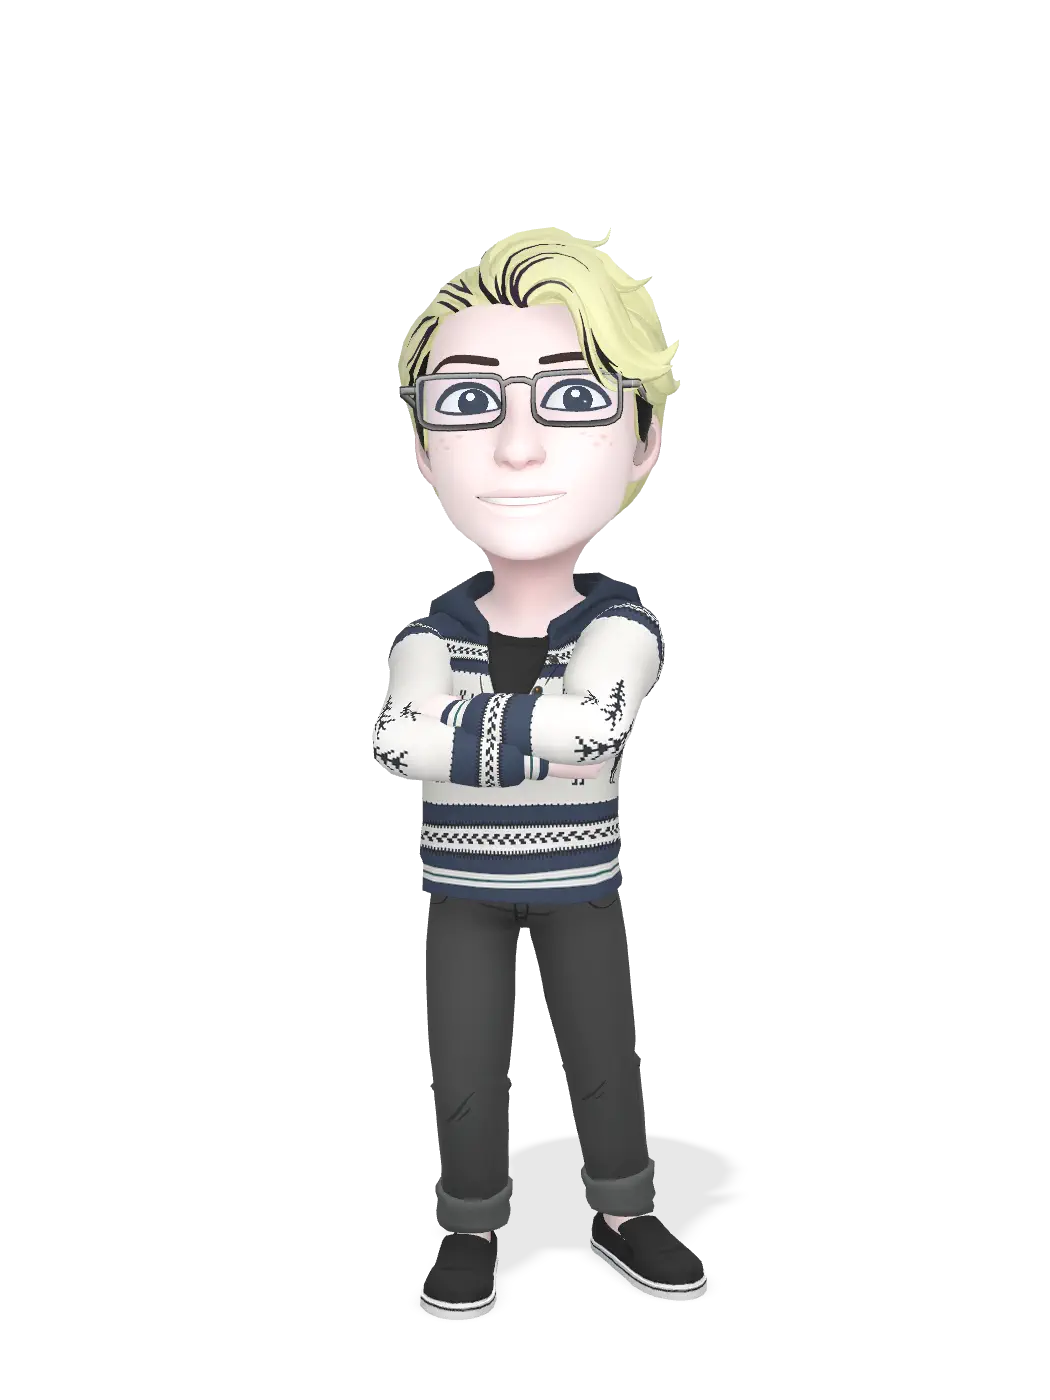 3D Bitmoji for hurtingsz avatar